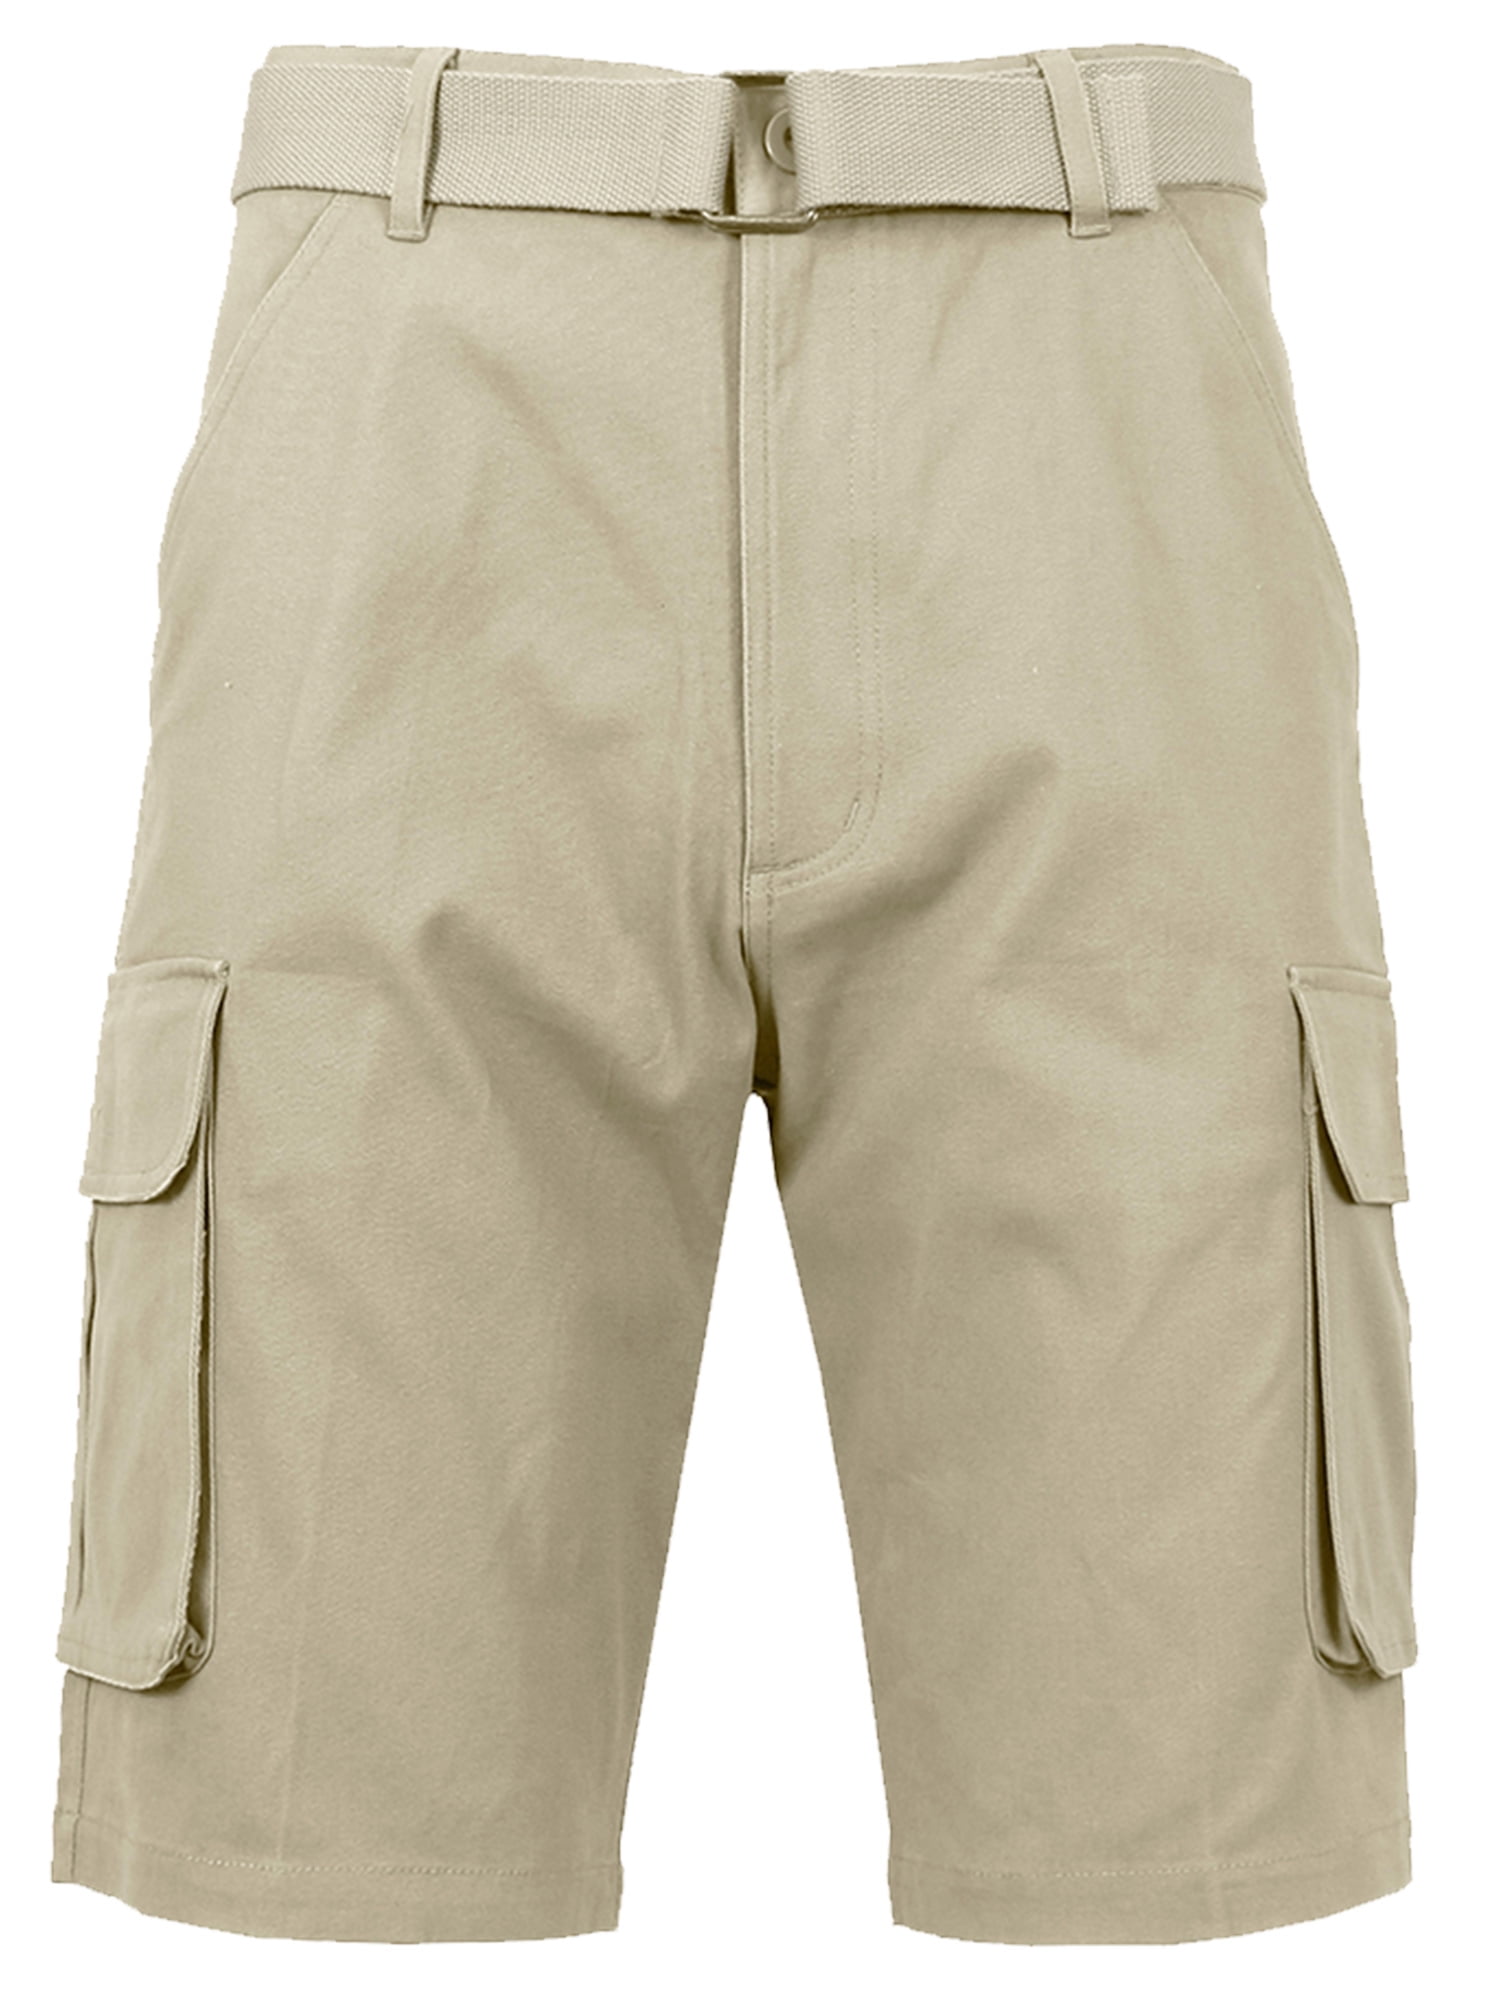 Mens Stretch Chino Shorts Knee Length Cargo Combat Pants Cotton Free Belt 30-48 